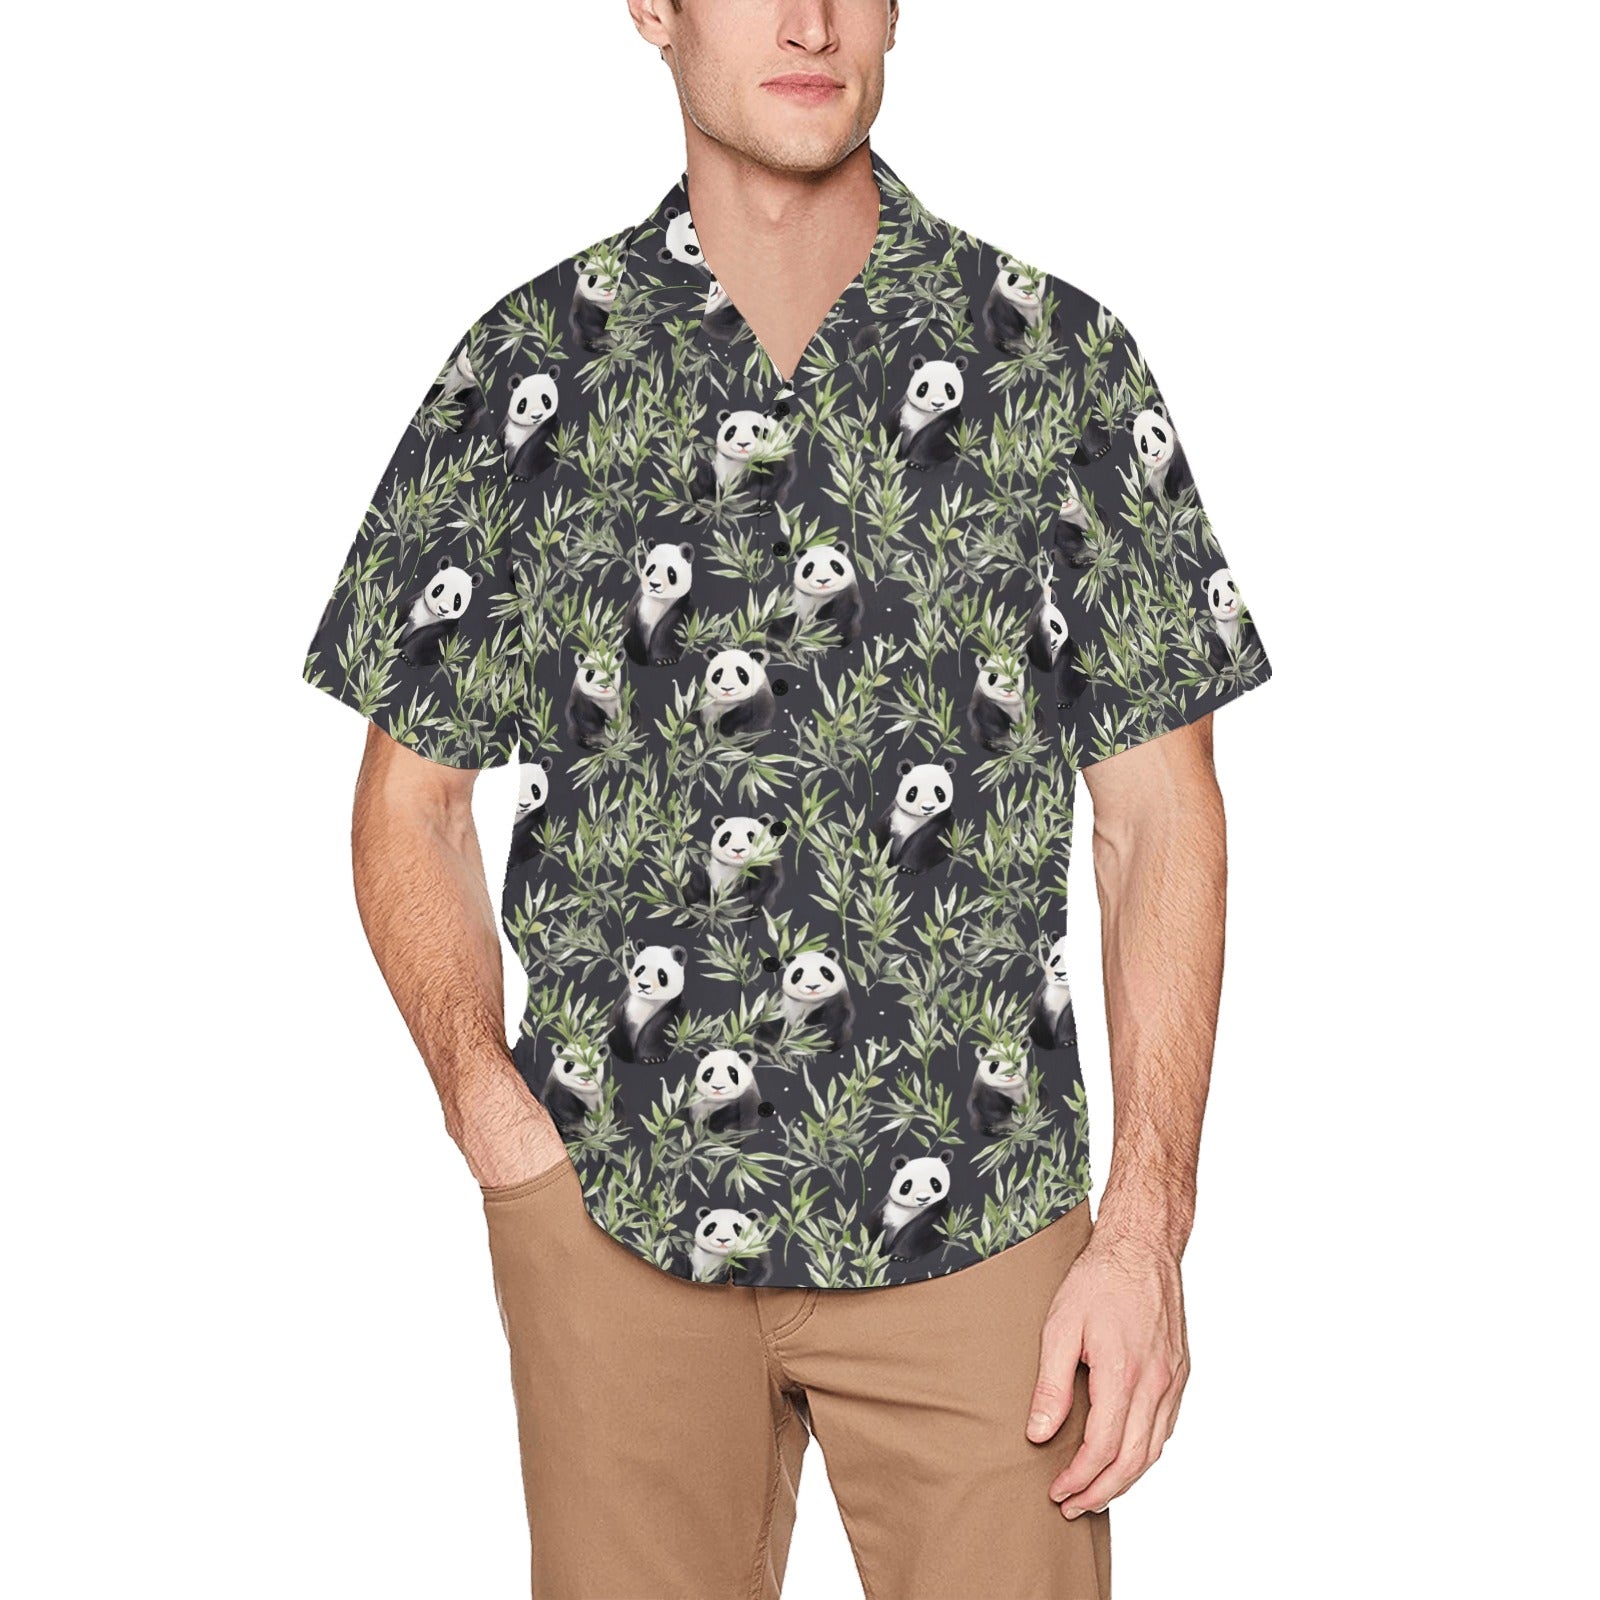 Panda Men Hawaiian shirt Chest Pocket, Bamboo Leaves Black Green Print Retro Summer Hawaii Aloha Beach Plus Size Cool Button Down Shirt Starcove Fashion